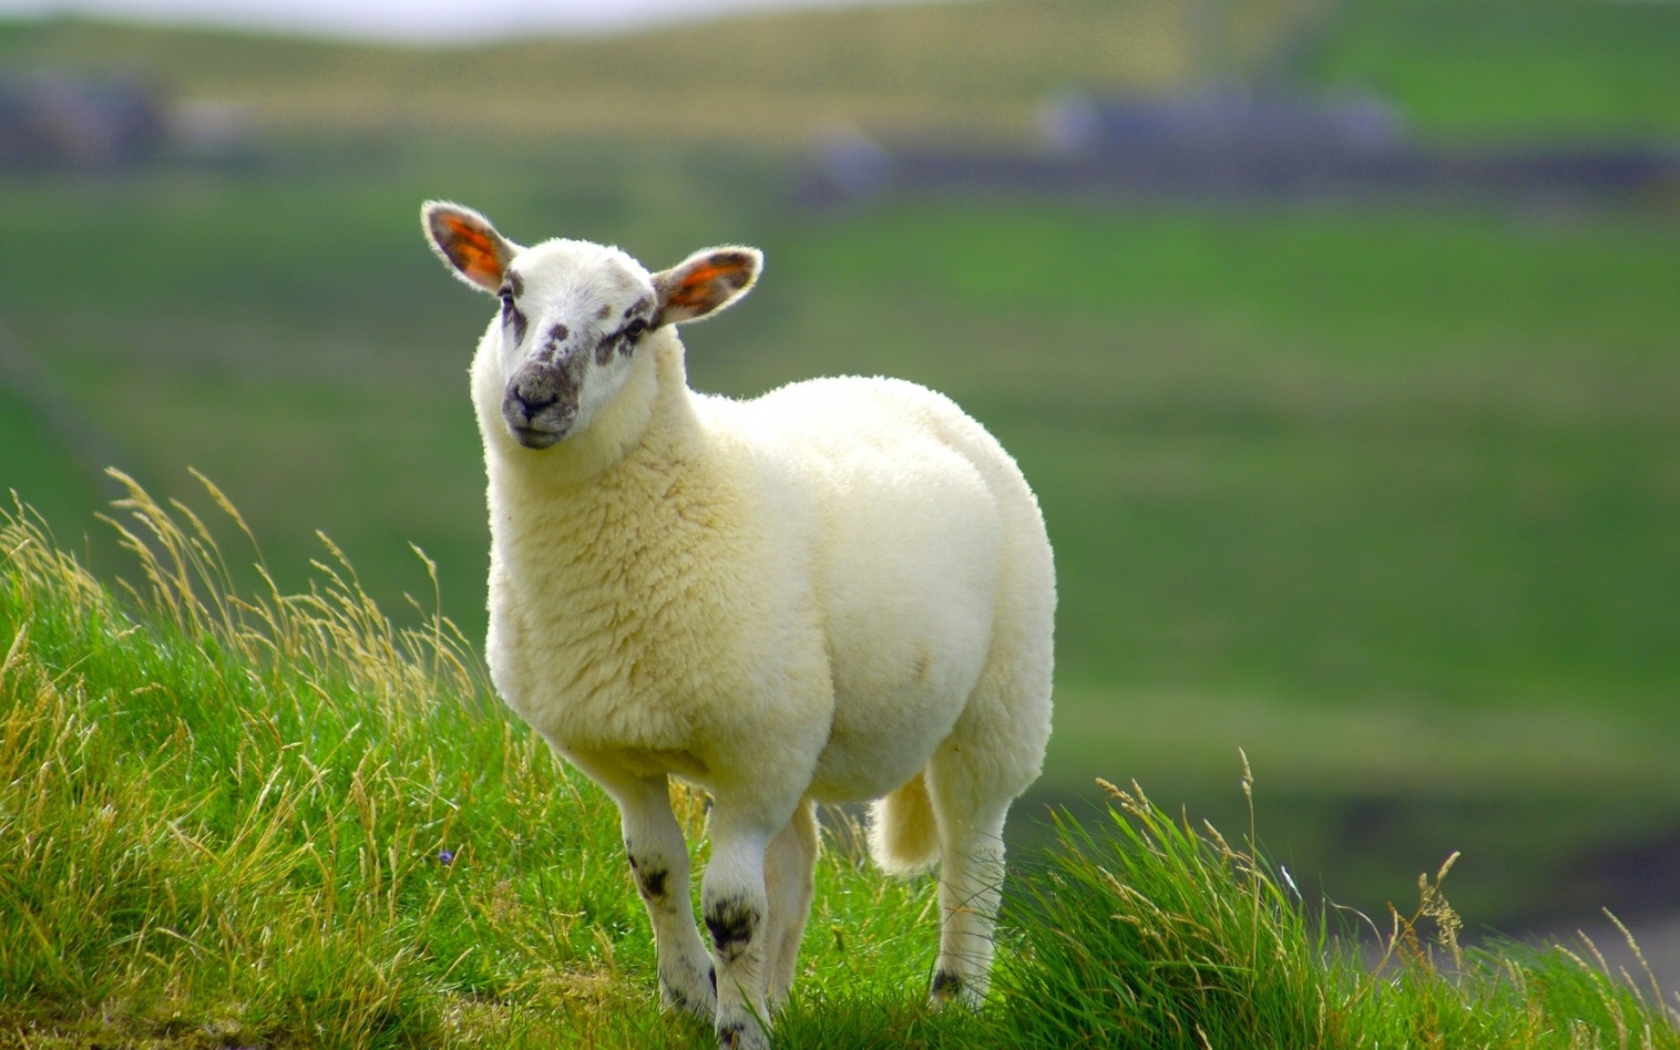 Fluffy white sheep on green grass